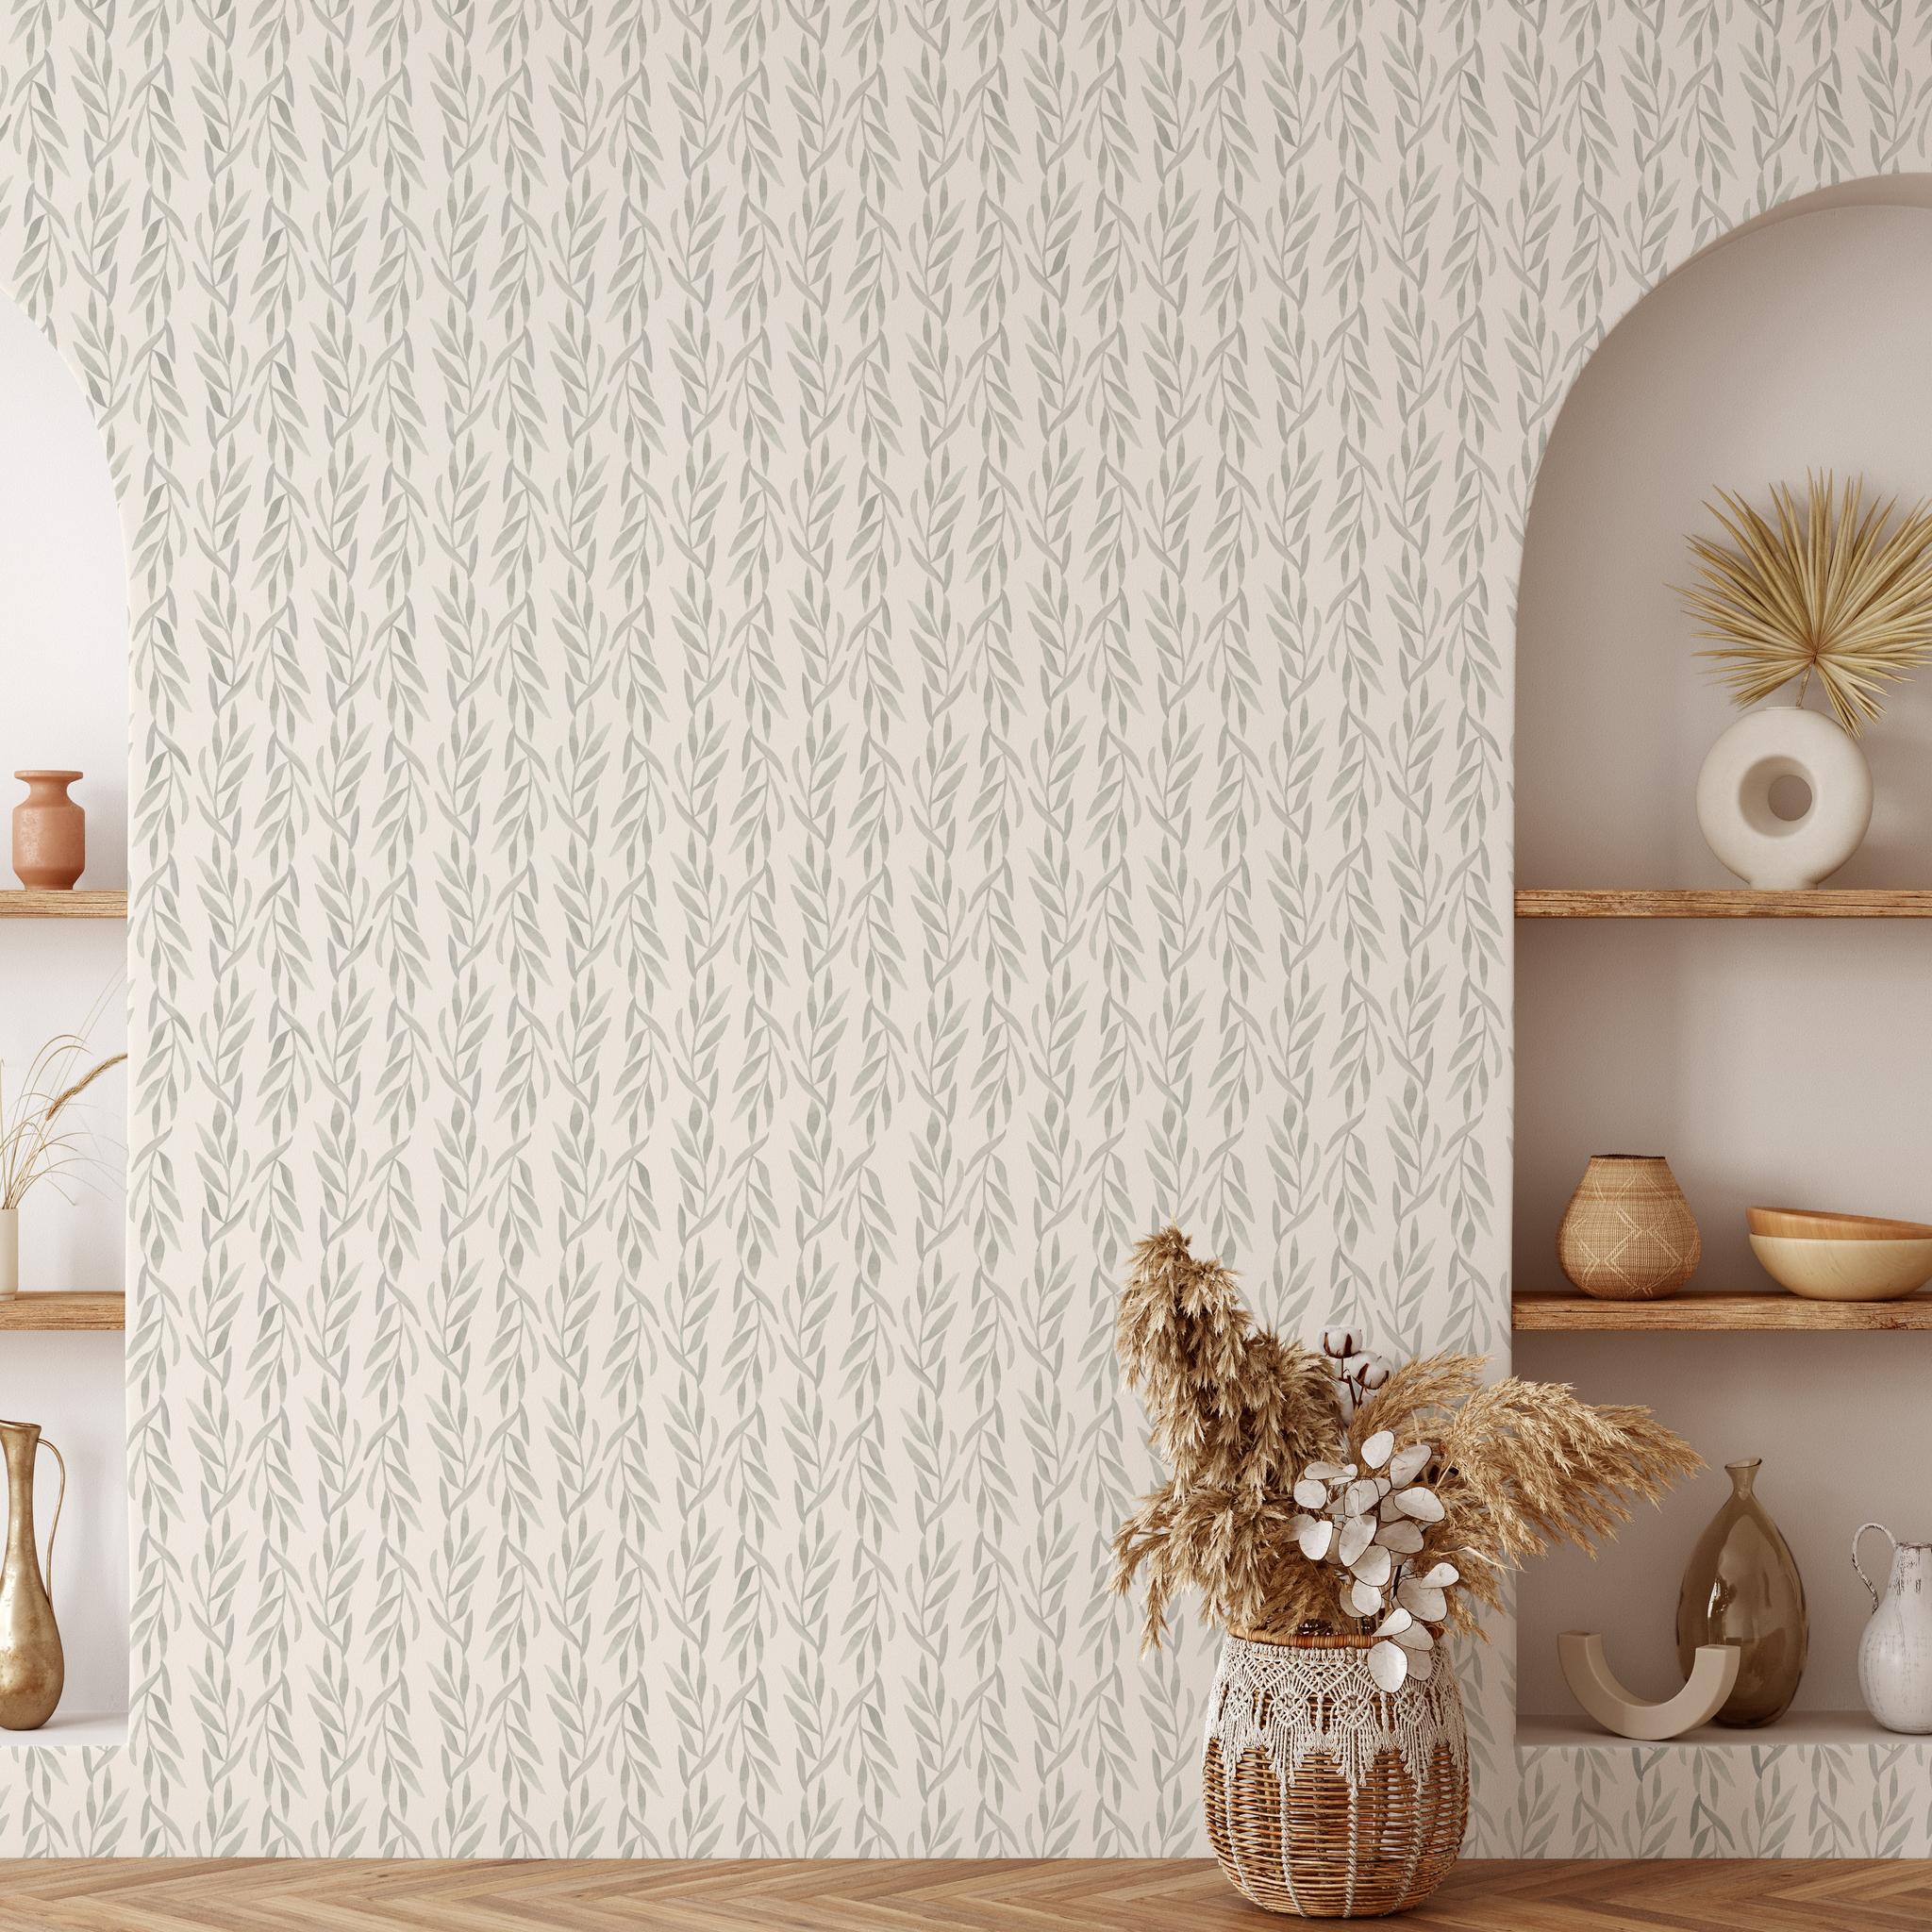 "Sweet Ava Ryan Wallpaper by Wall Blush in modern living room, elegant botanical design focus."